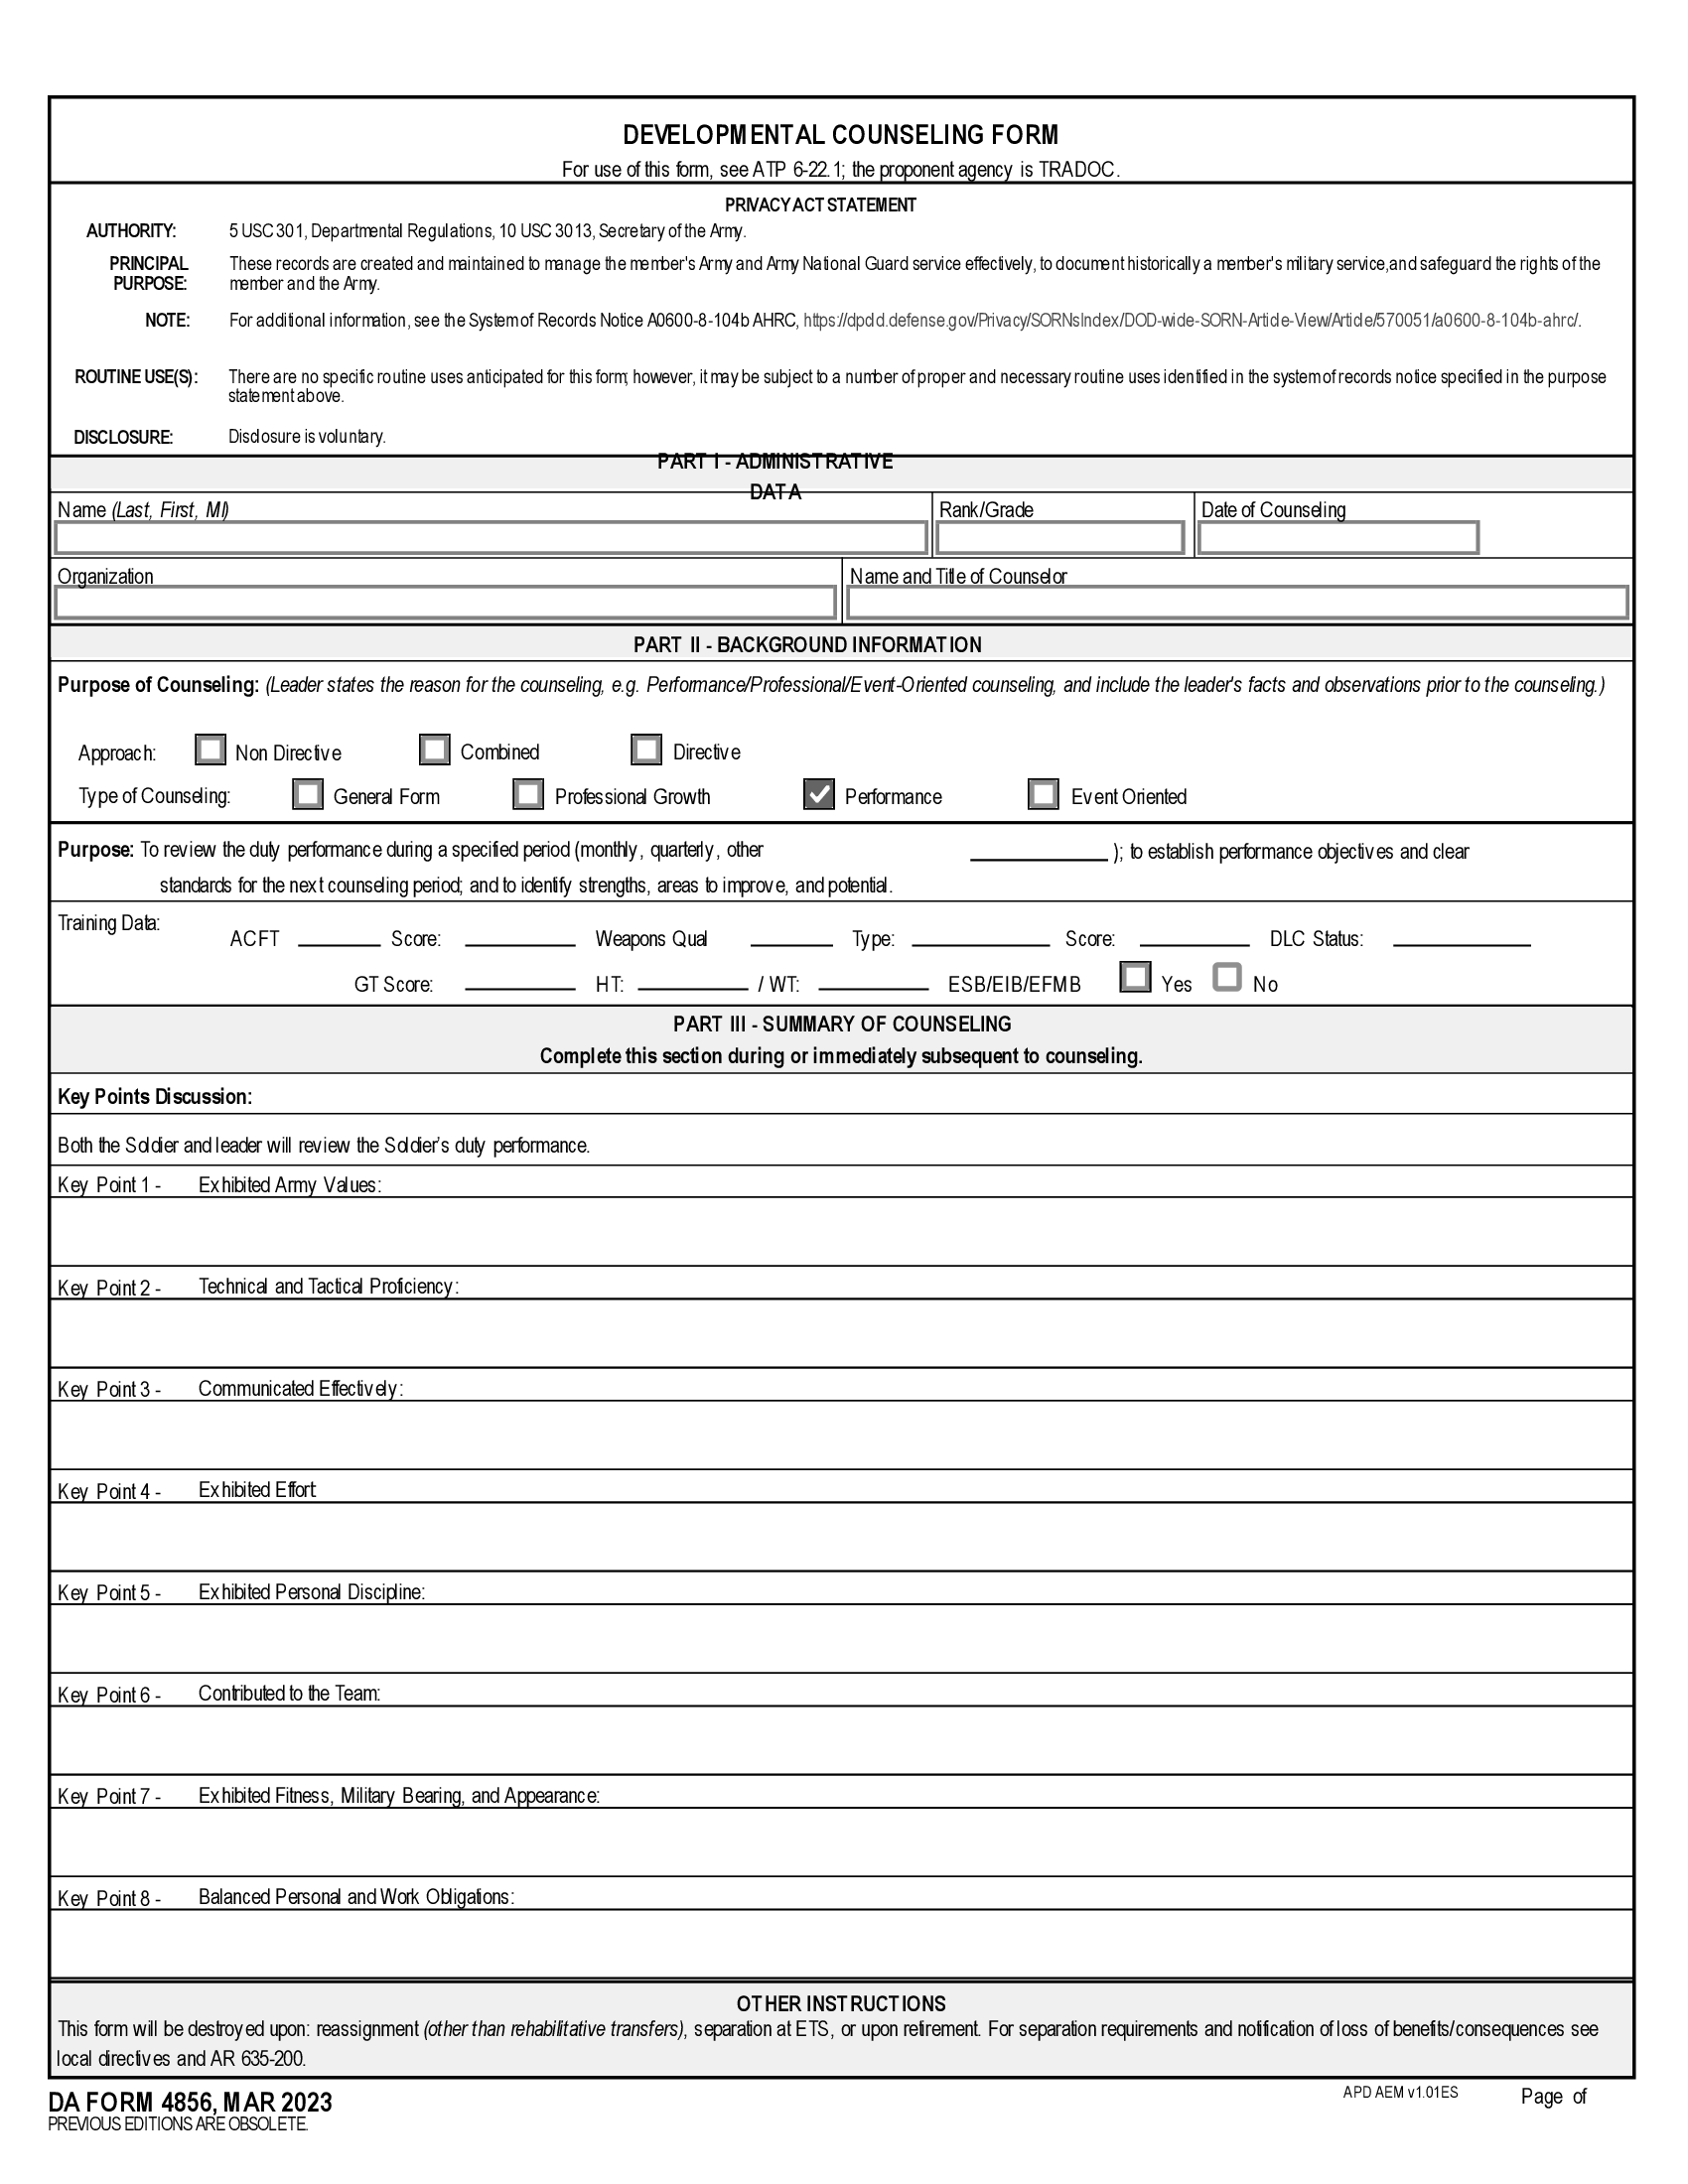 DA Form 4856. Developmental Counseling Form Forms Docs 2023